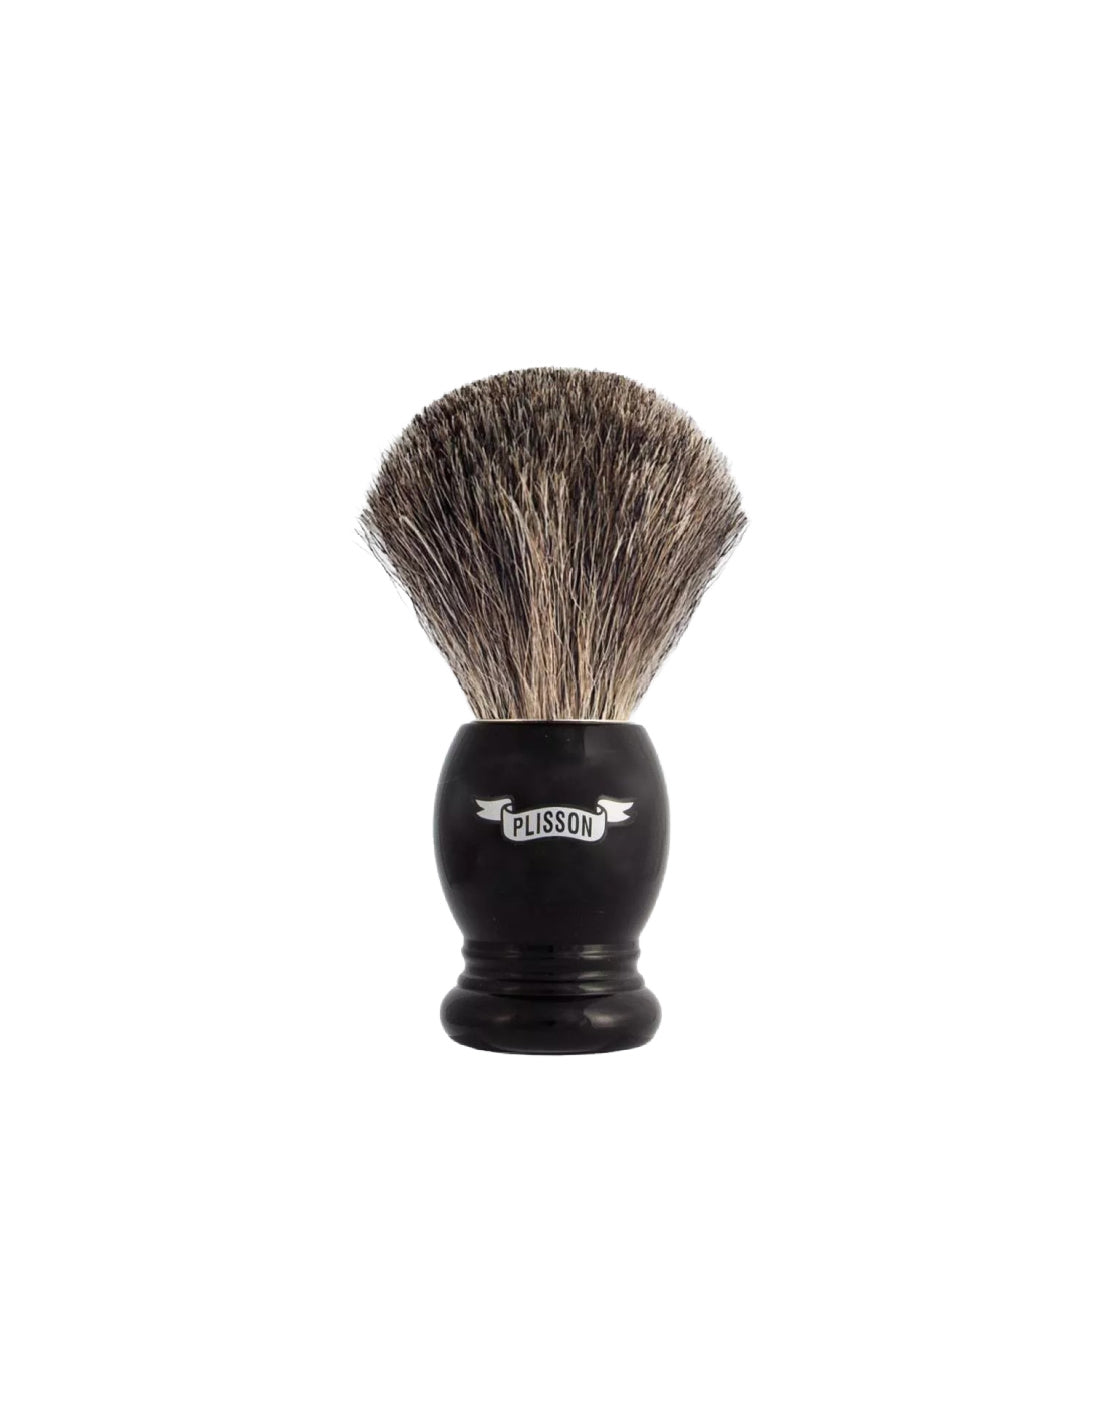 Plisson 1808 Essential Russian Grey Genuine Badger Shaving Brush - 9 Colors